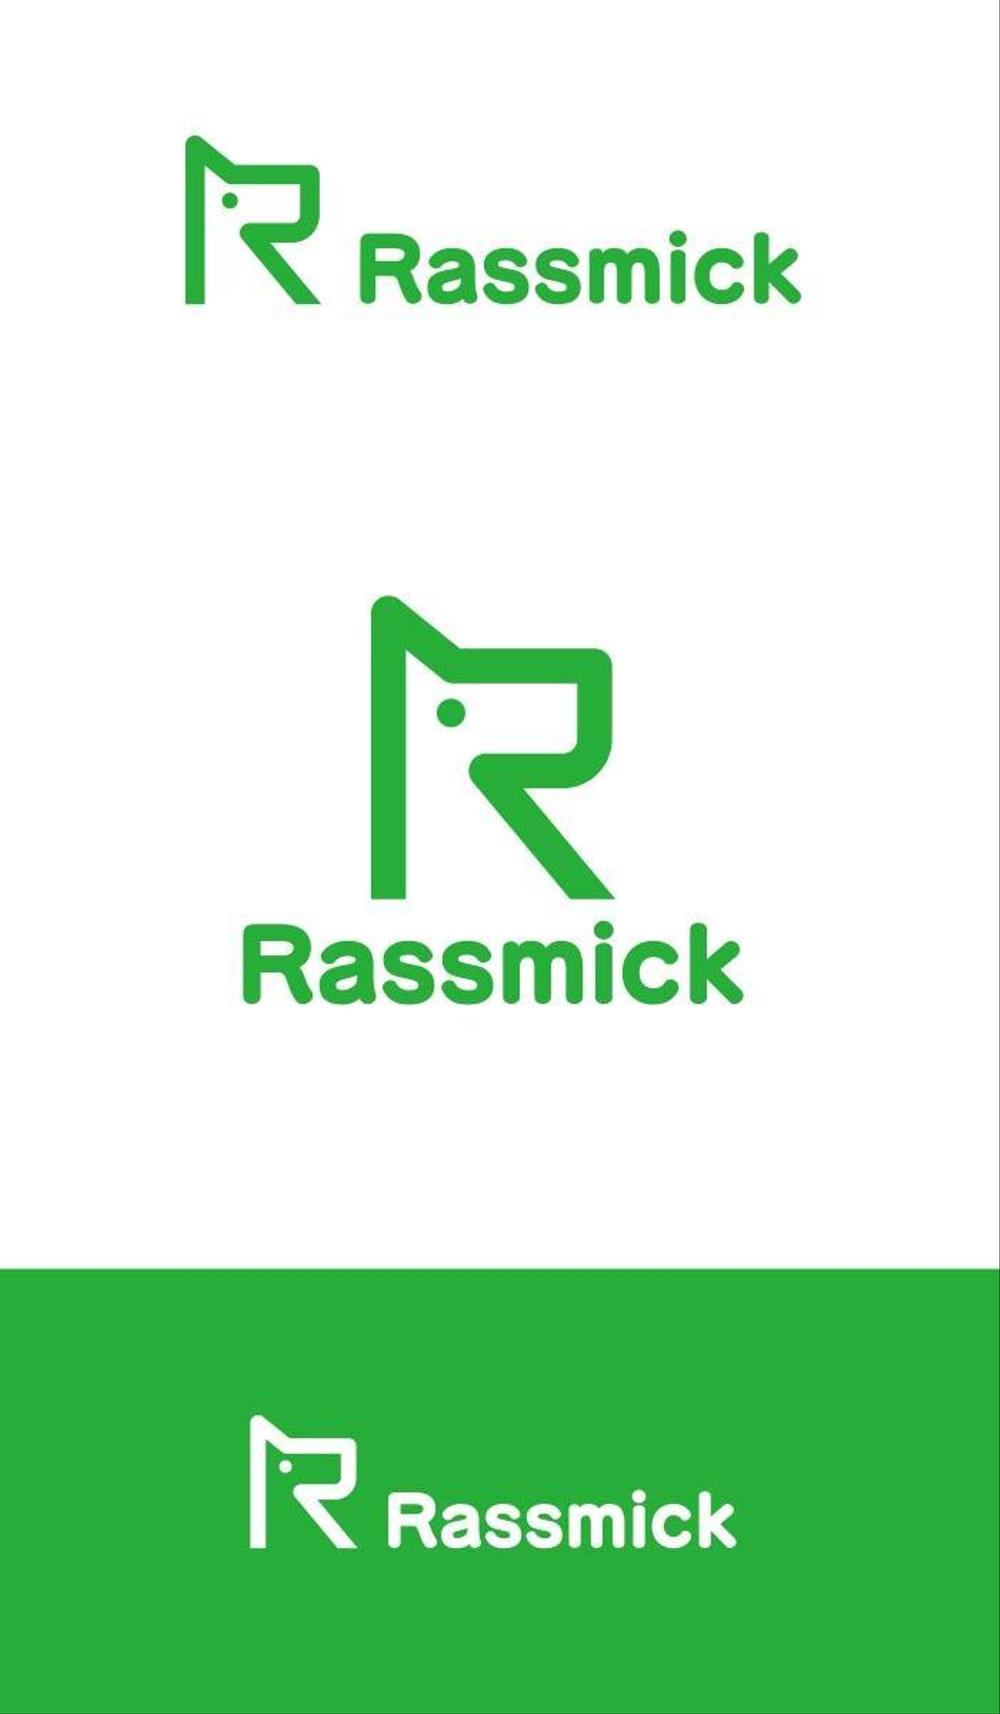 Rassmick logo_serve.jpg